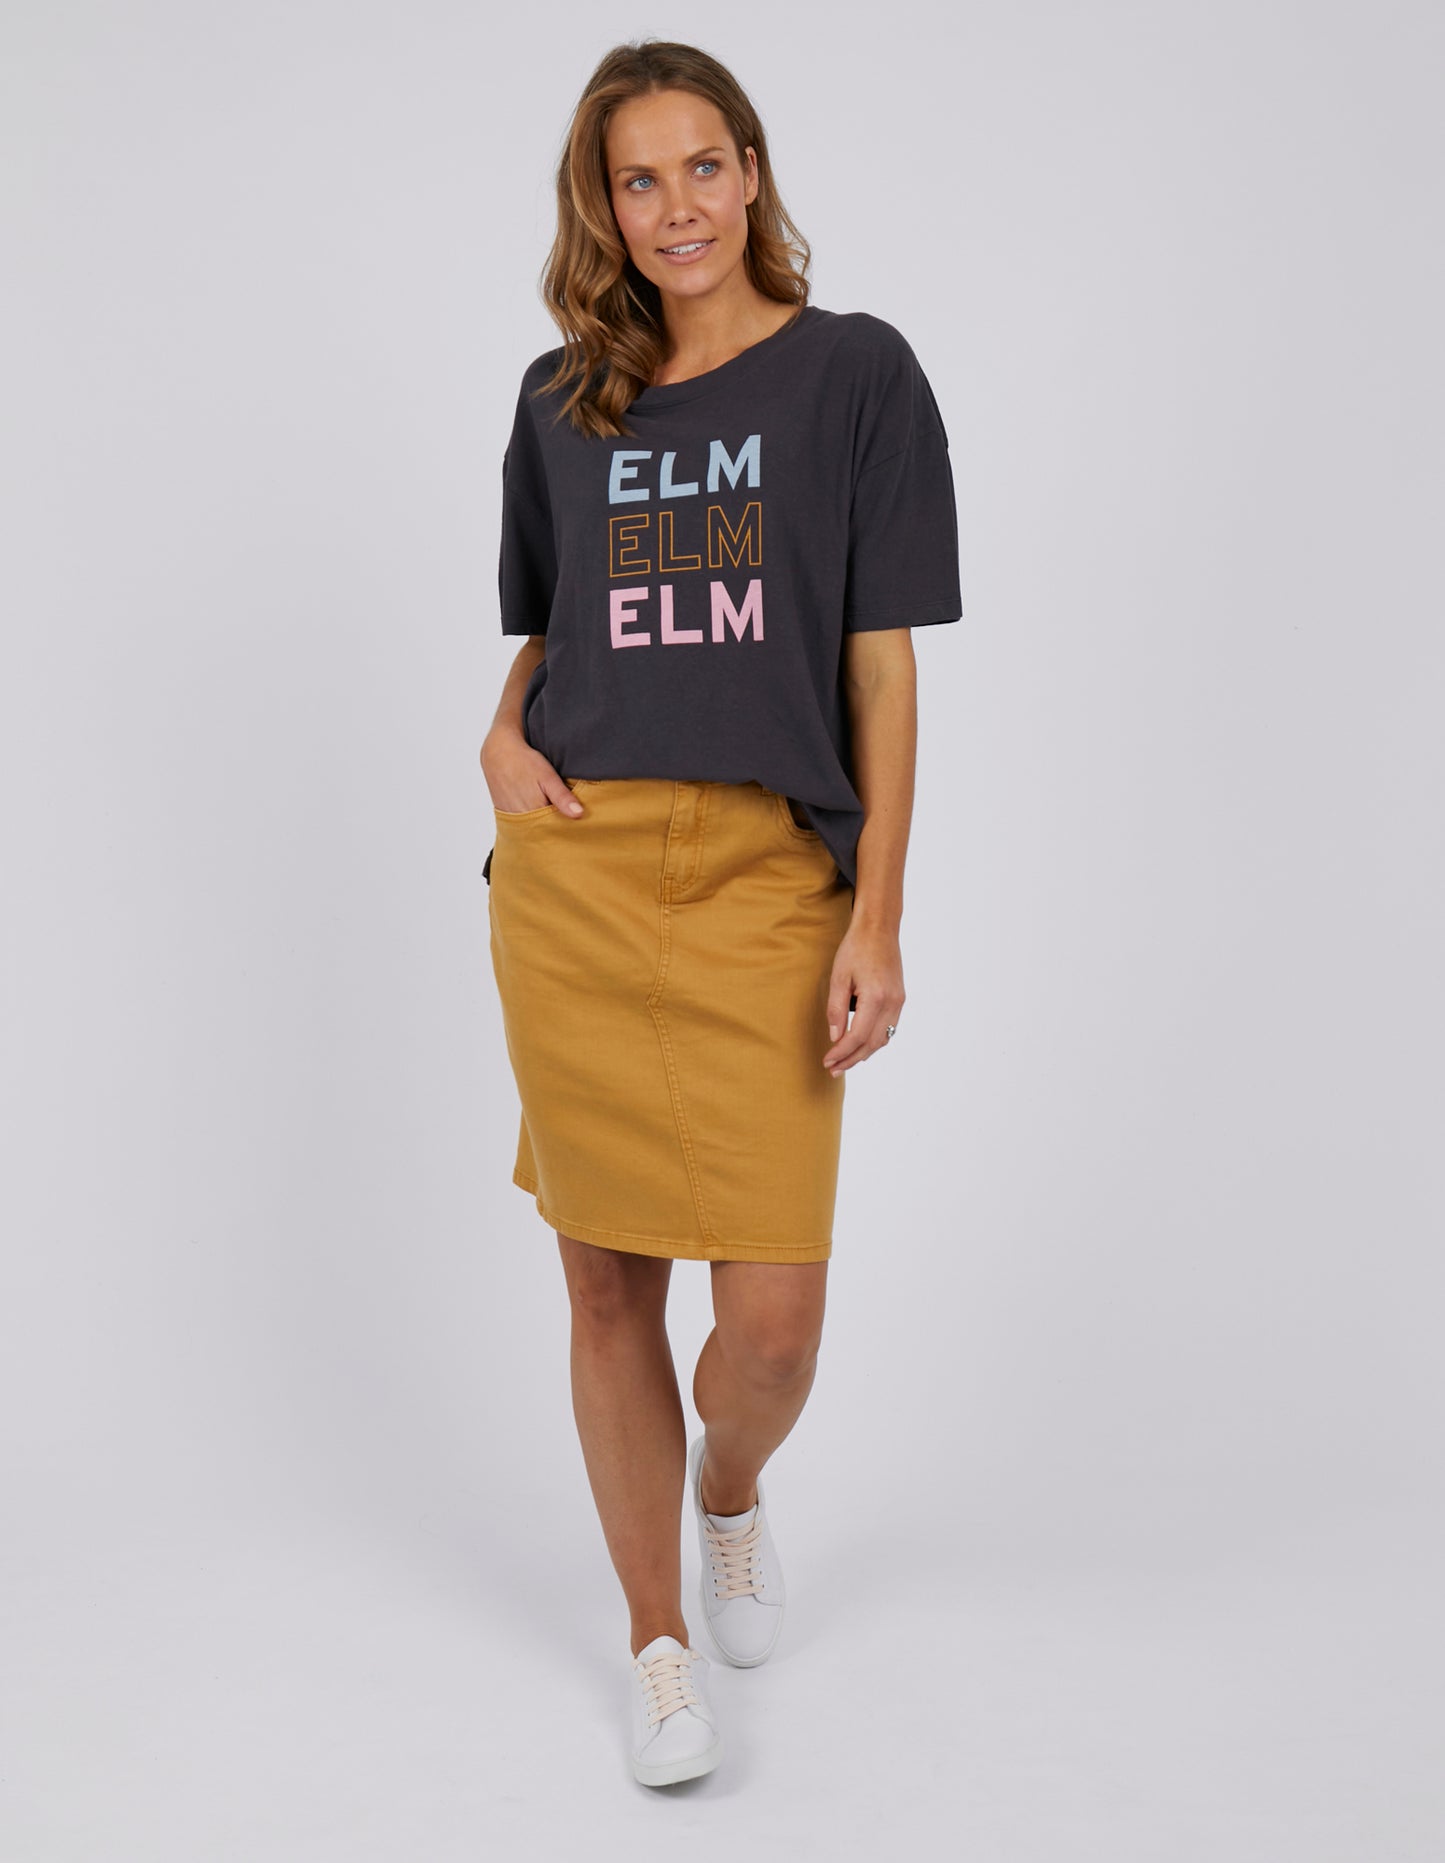 Elm Block S/S Tee - Washed Black